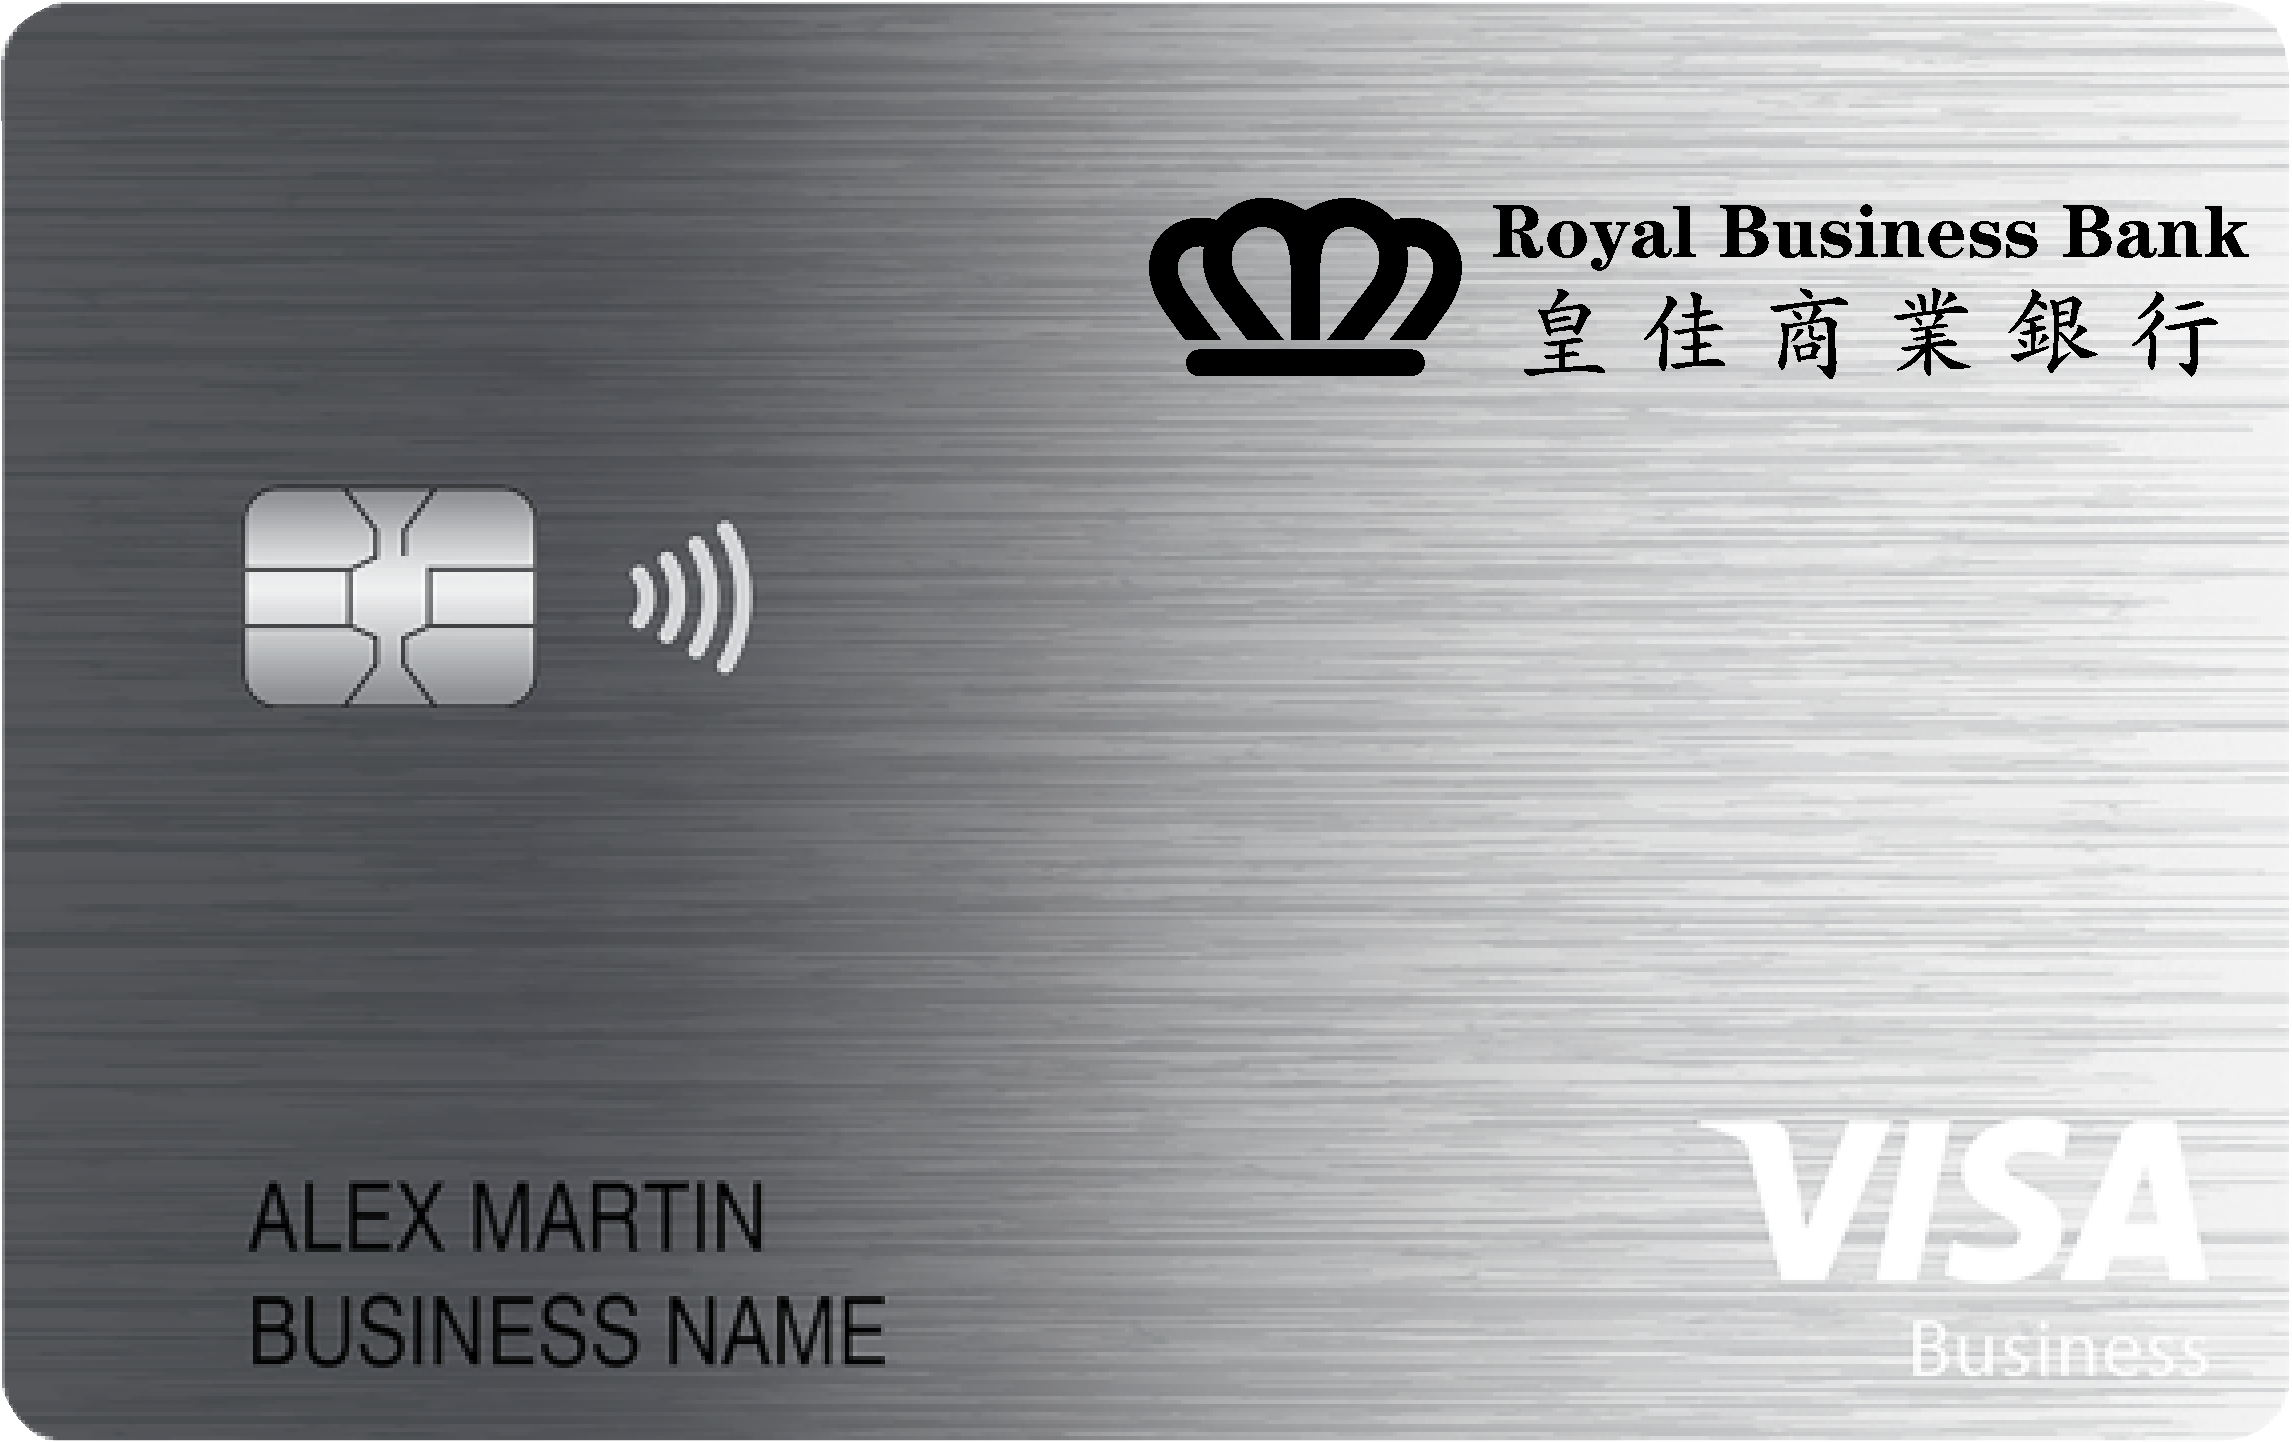 Royal Business Bank Business Real Rewards Card